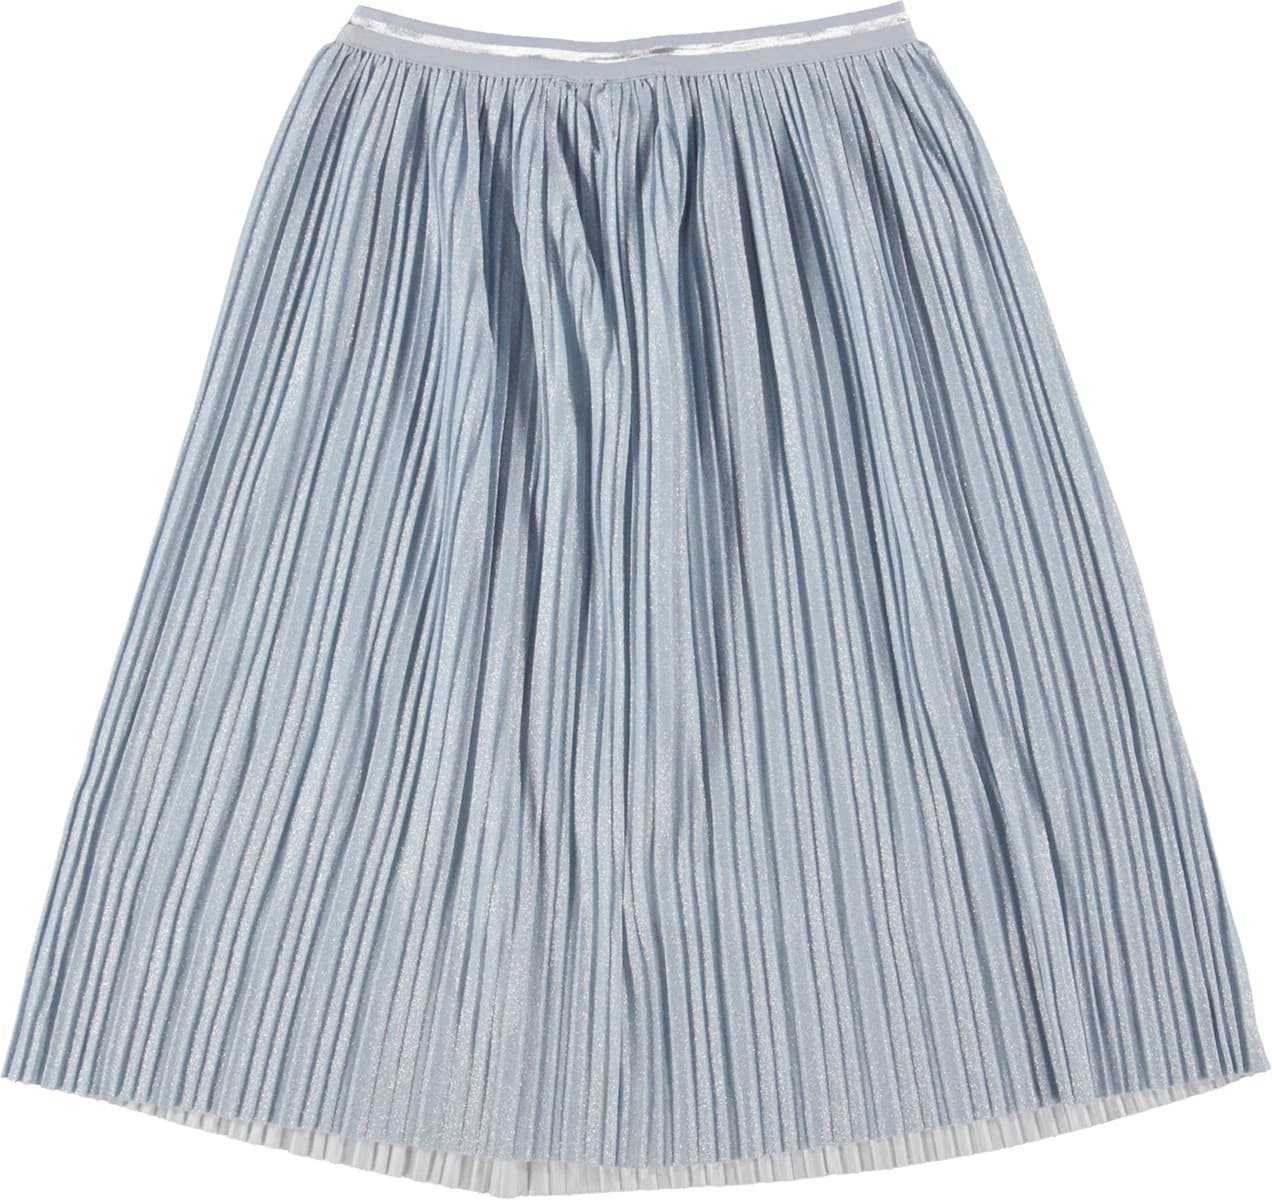 Bailini Skirt